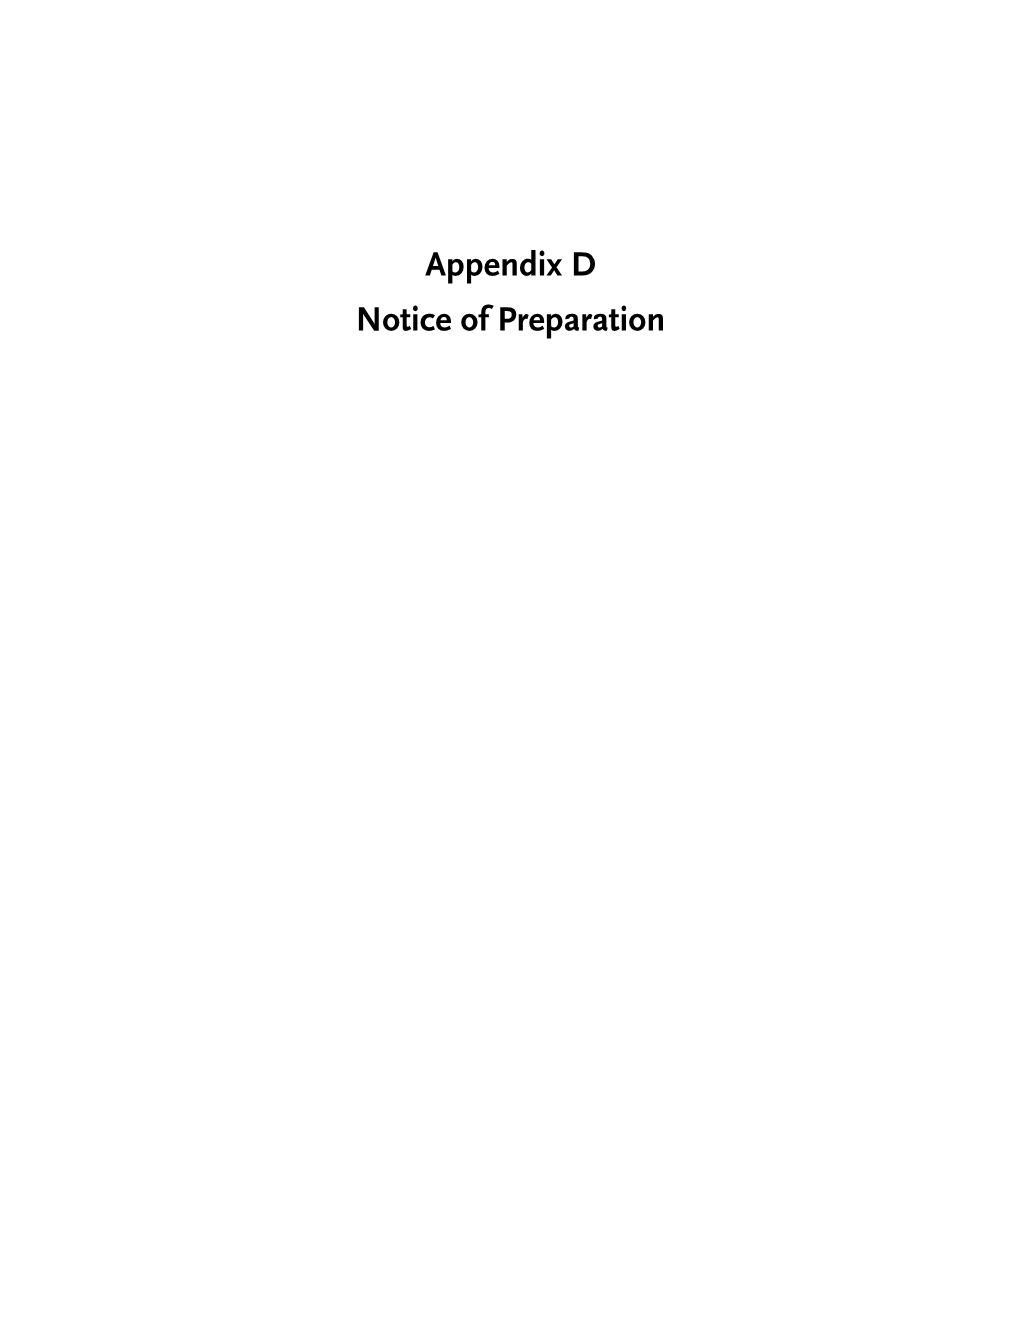 Appendix D Notice of Preparation